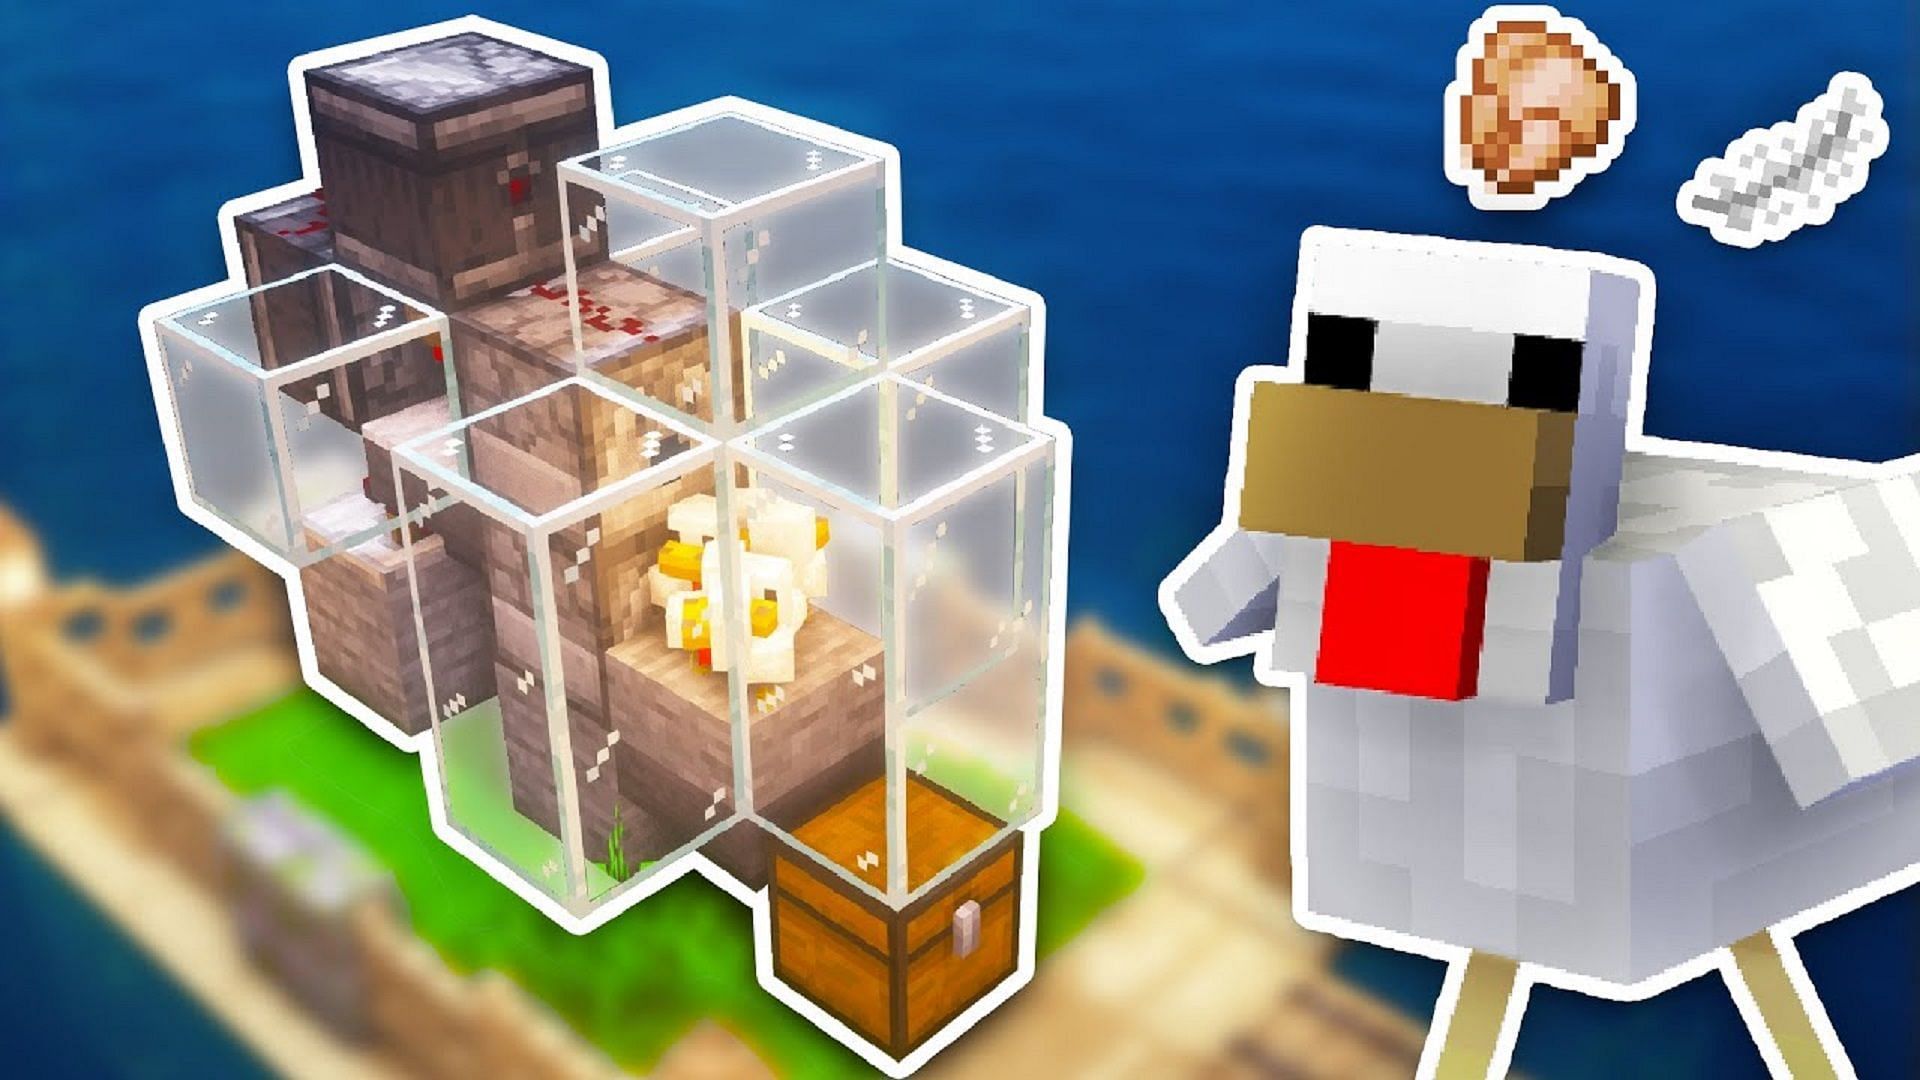 A basic automatic chicken farm design in Minecraft (Image via Mysticat/Youtube)